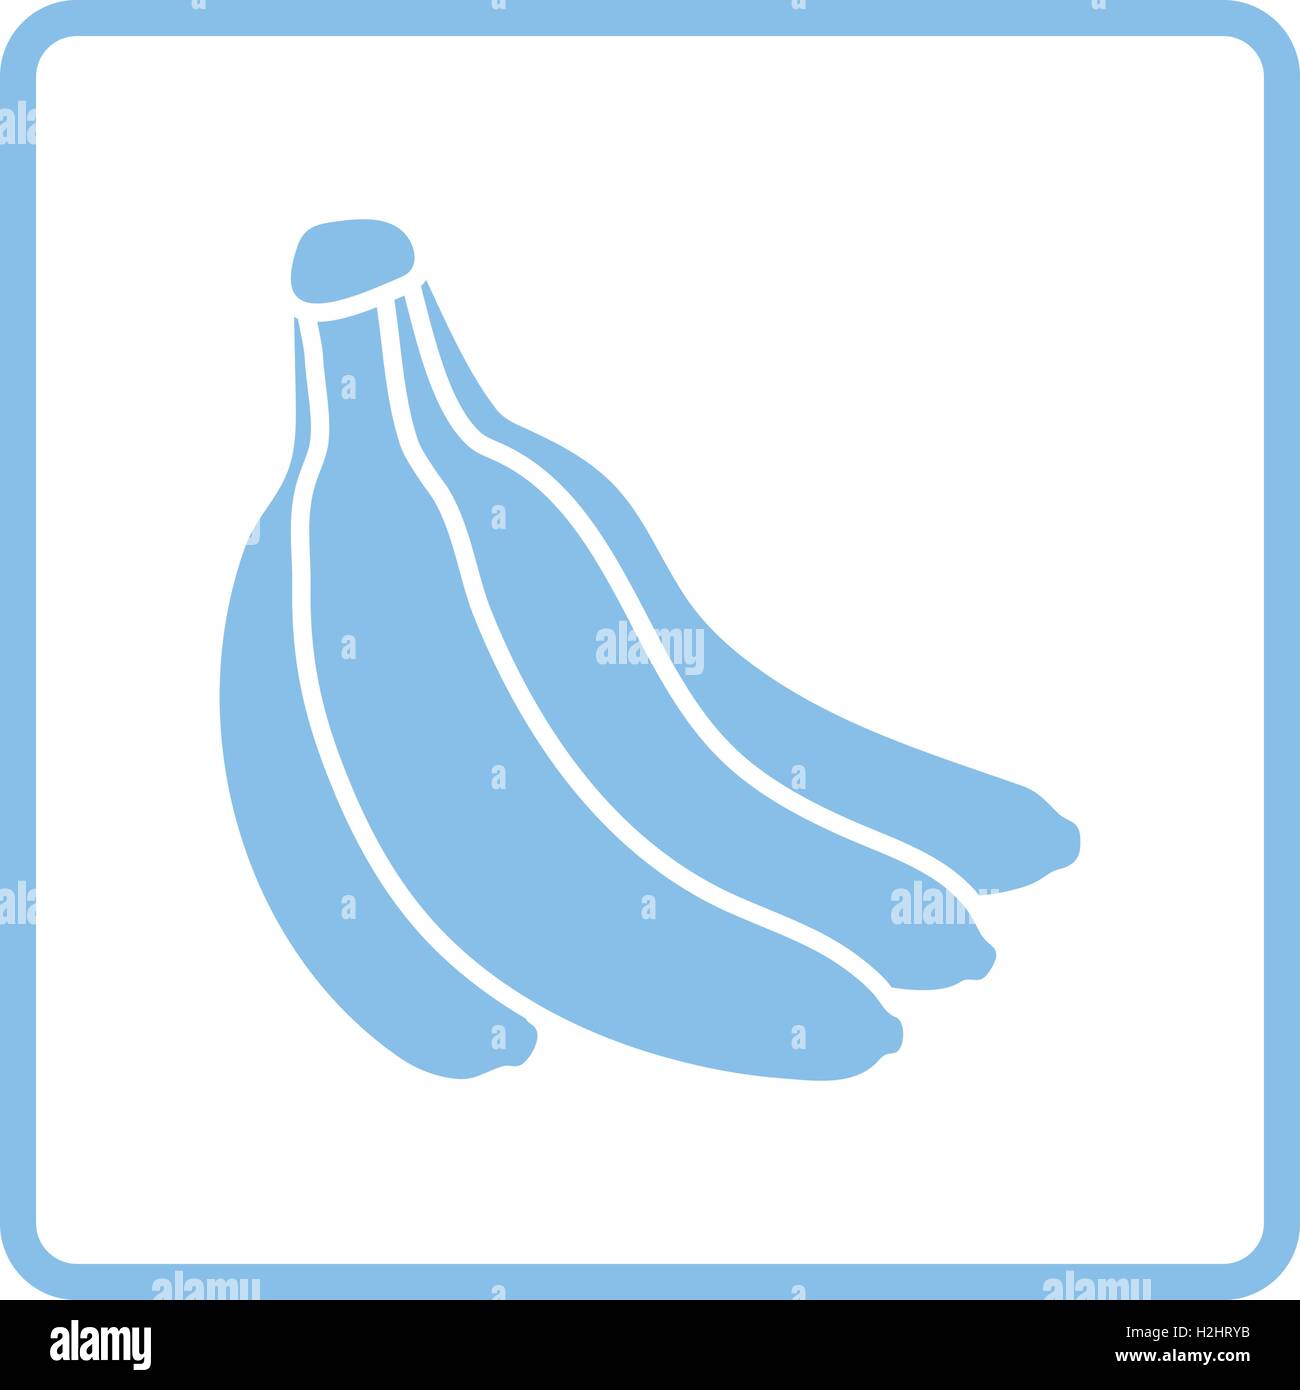 Banana icon. Blue frame design. Vector illustration. Stock Vector